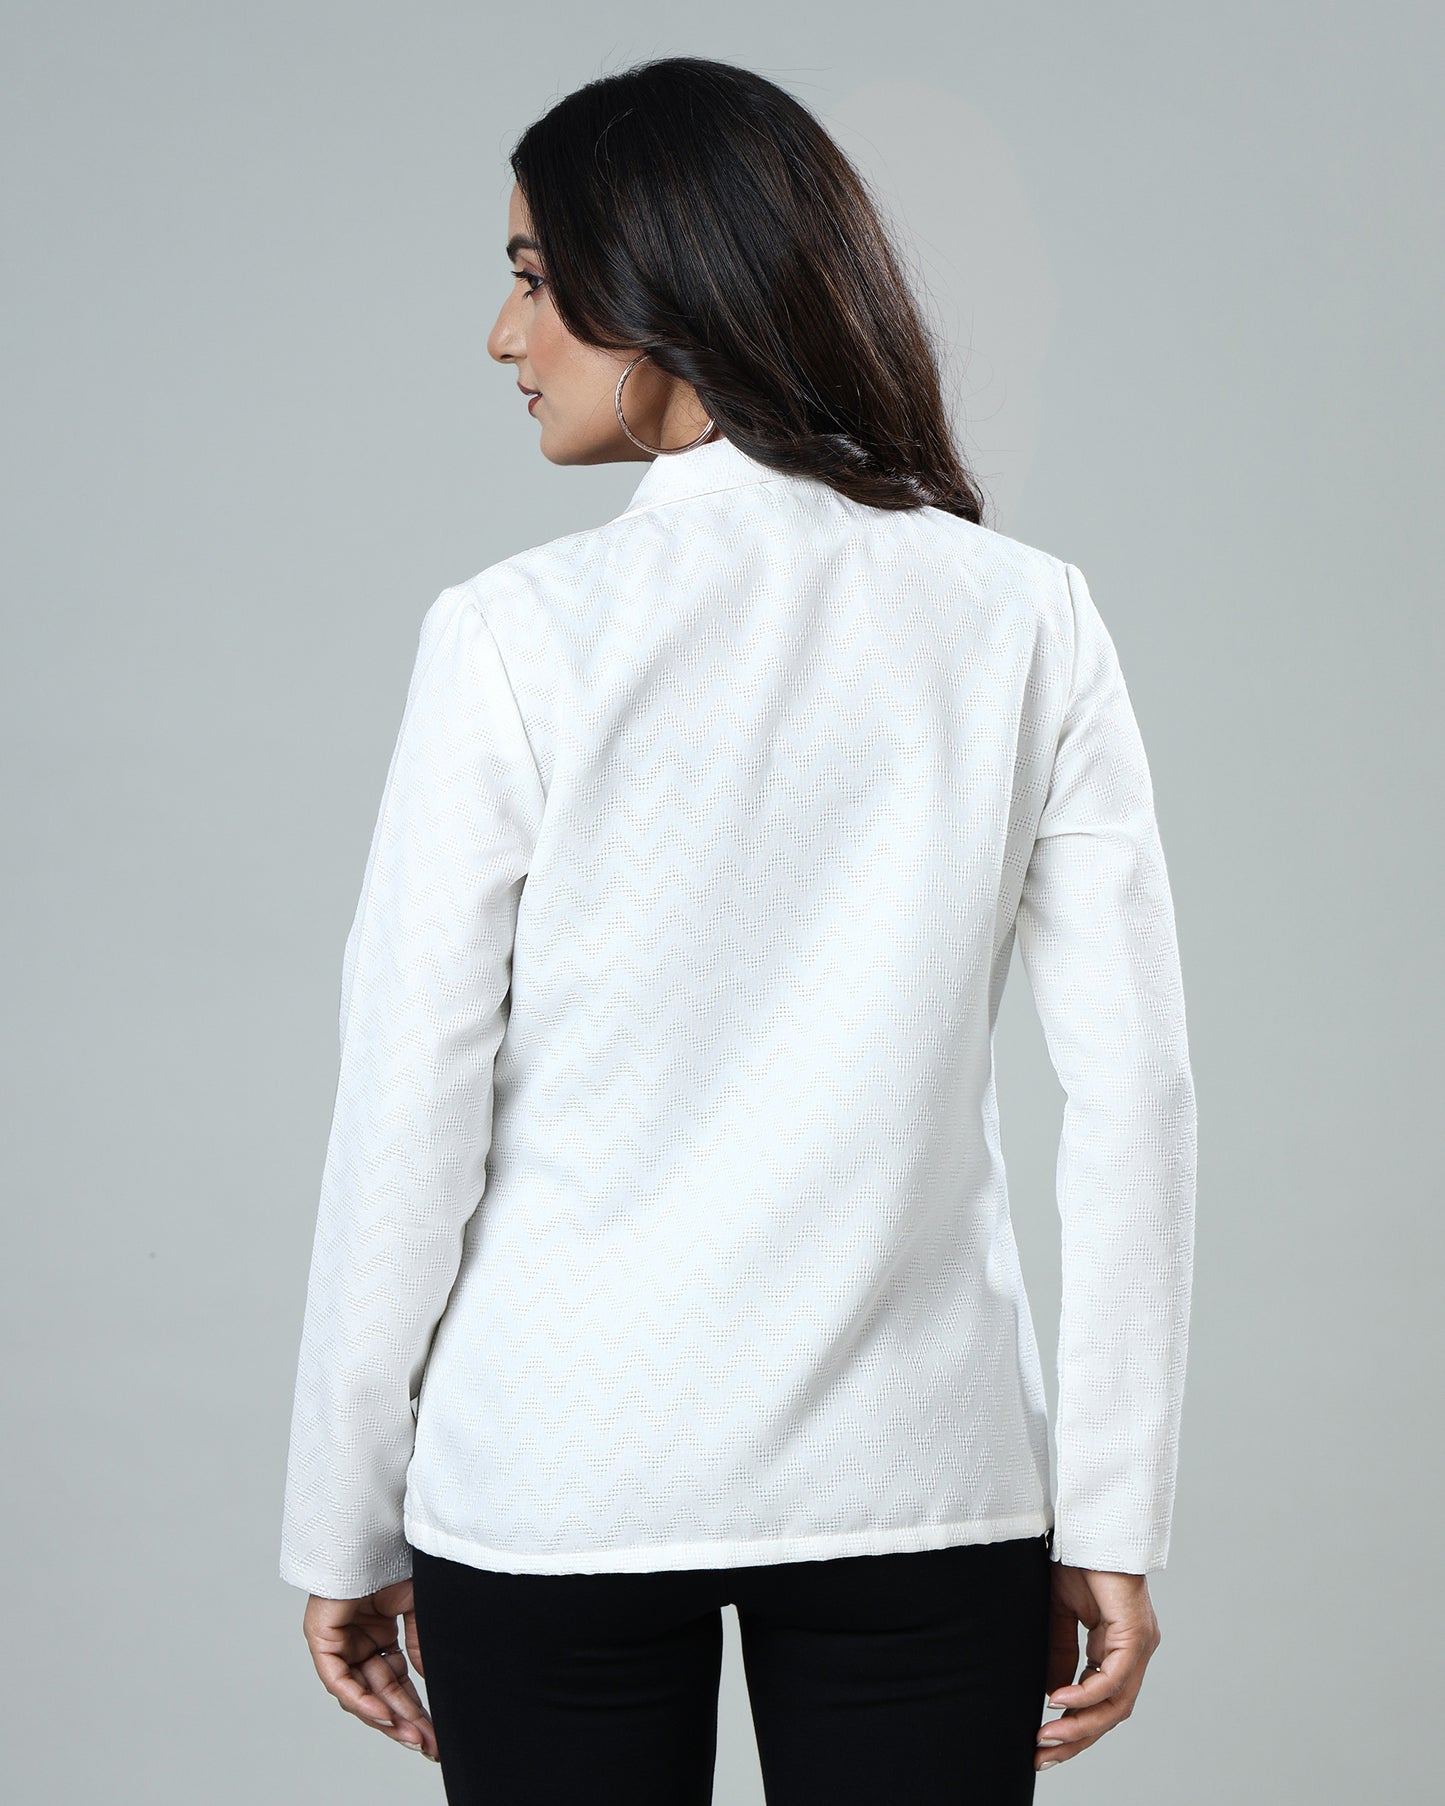 Classic White Women's Jacquard Weave Jacket